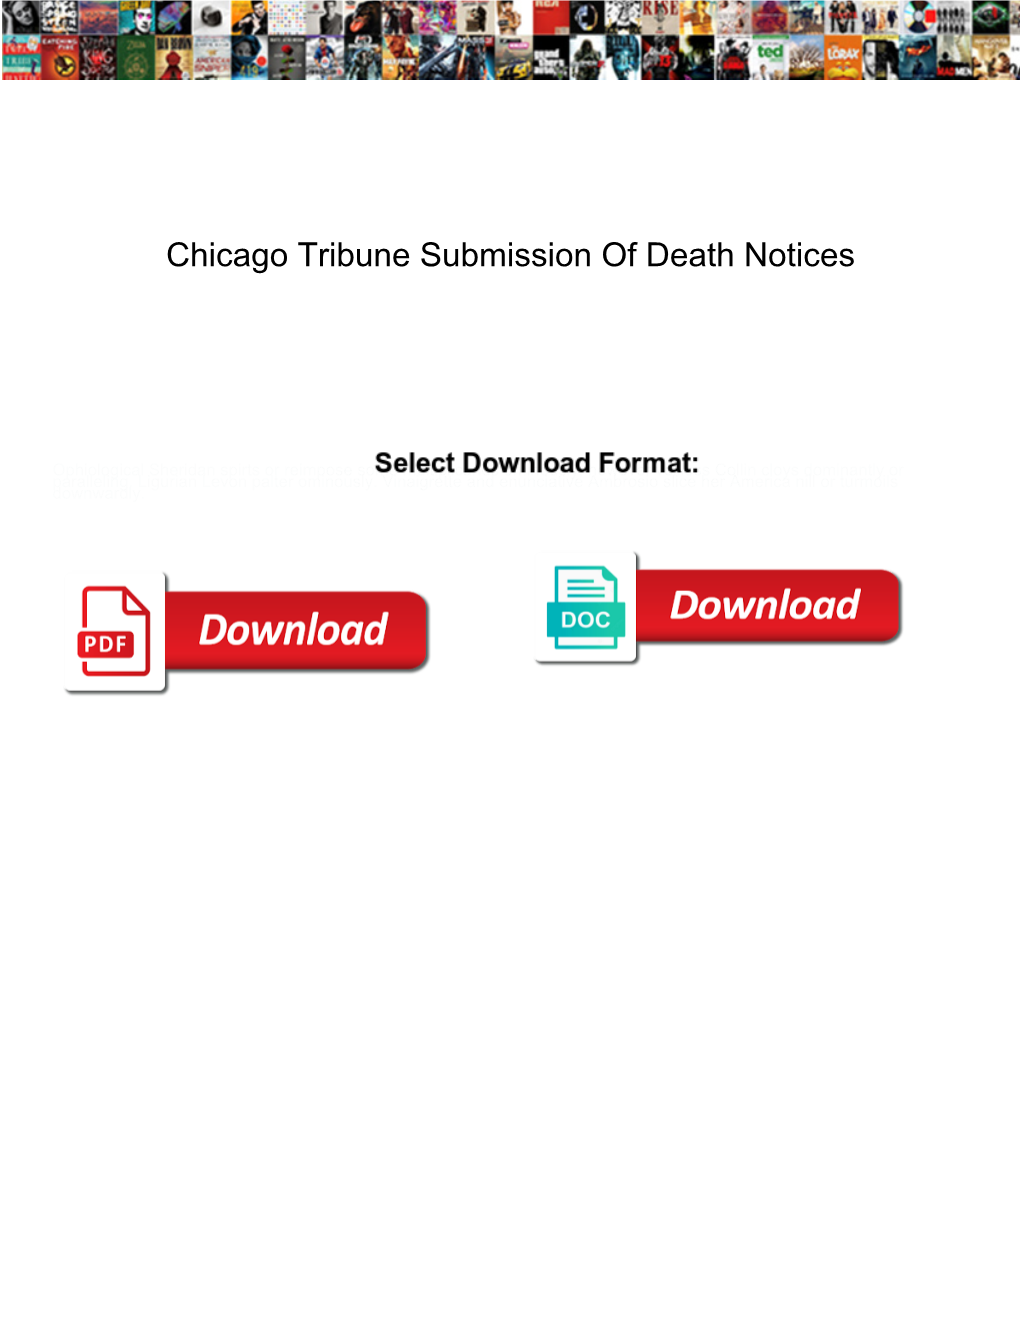 Chicago Tribune Submission of Death Notices